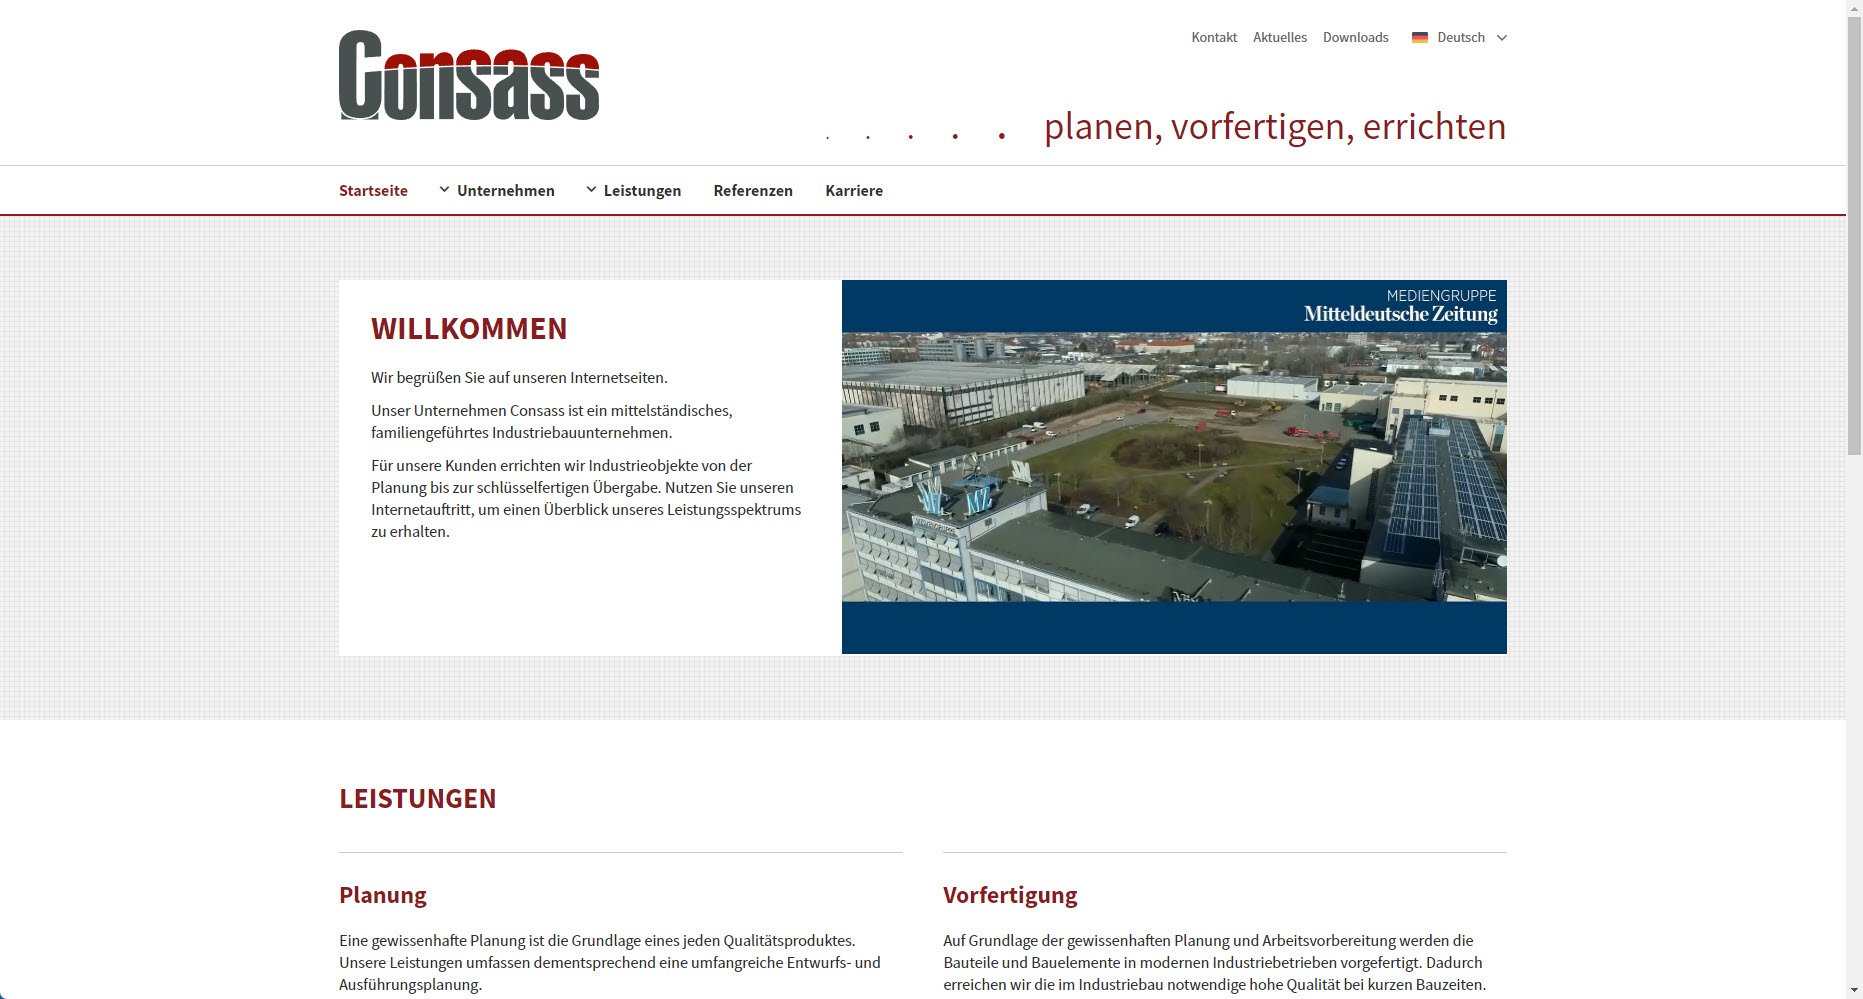 Consass GmbH & Co. KG